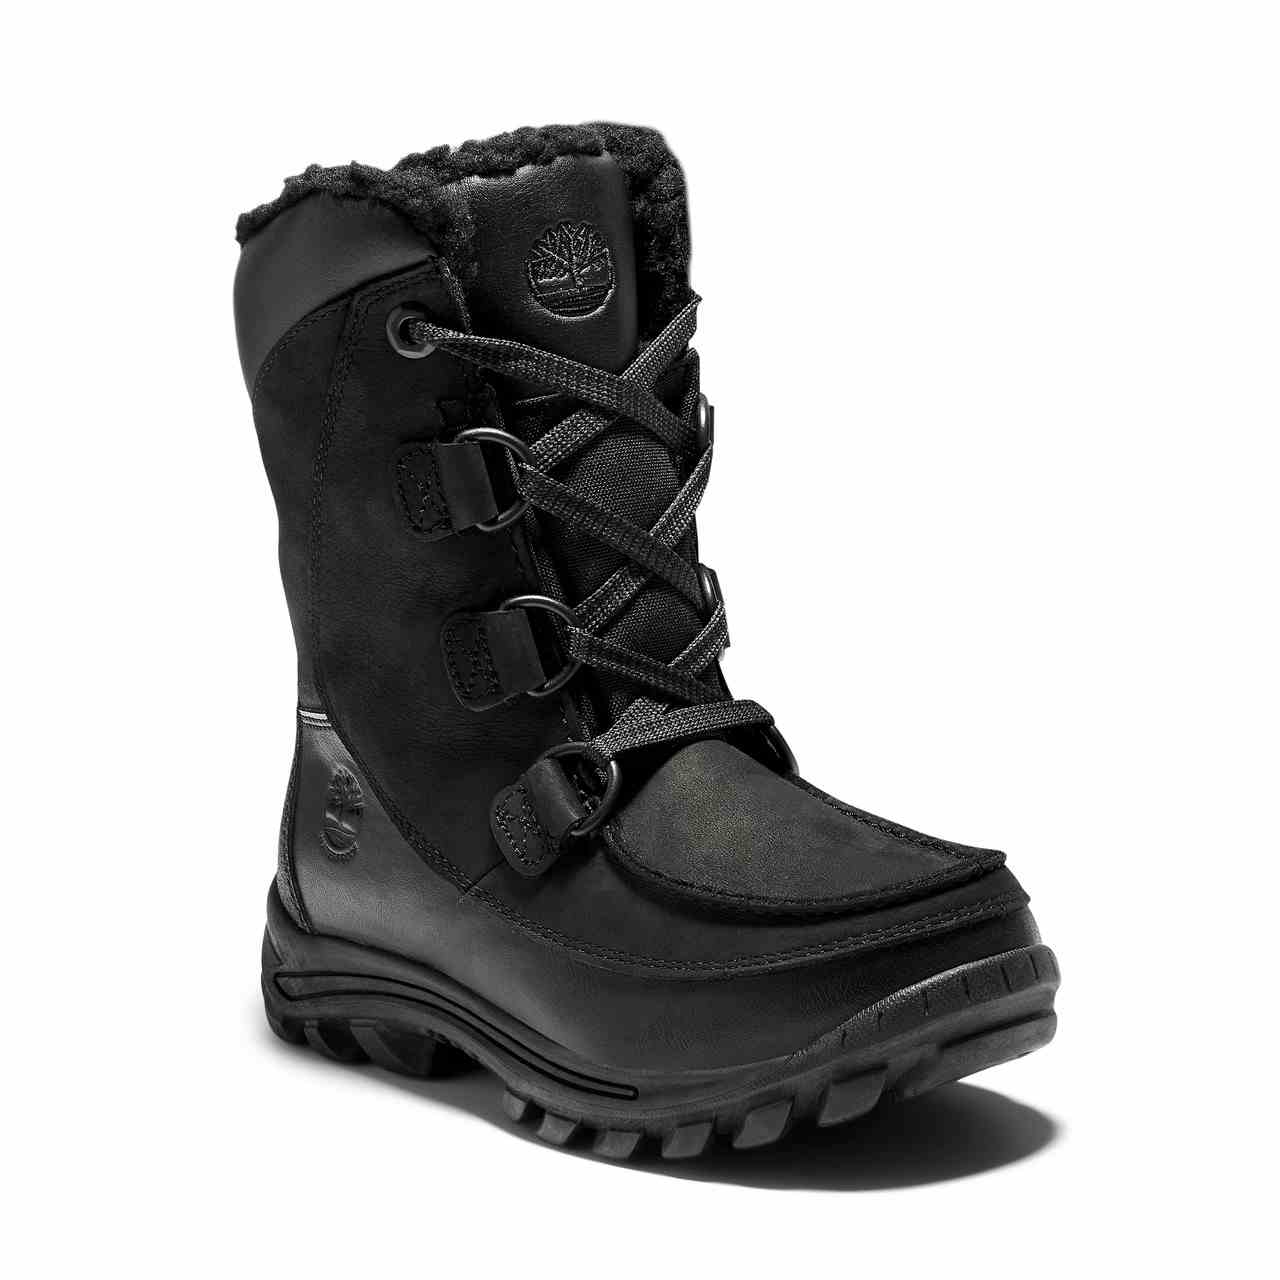 Chillberg Waterproof Mid Insulated Boots Black Nubuck